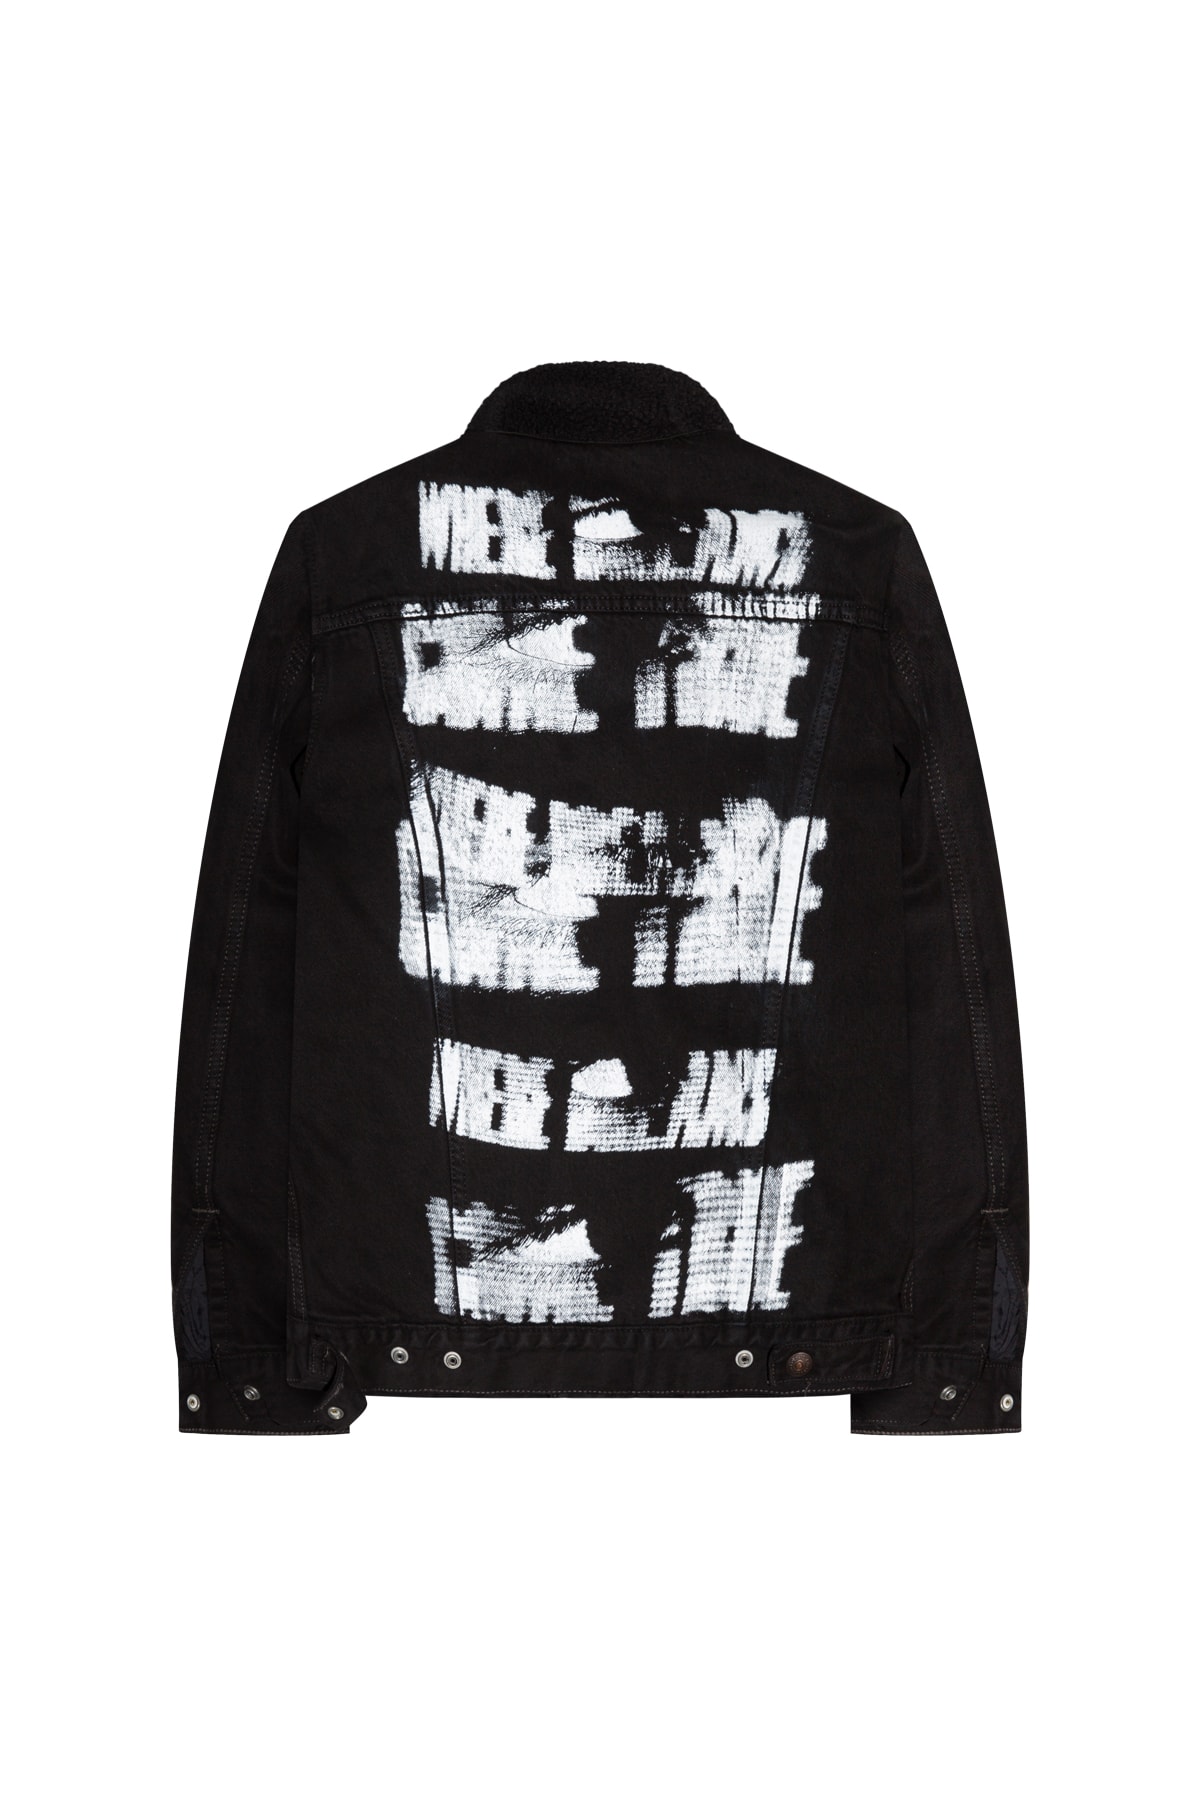 The Weeknd XO Tour Merch Release 004 Denim Sherpa Jacket Black